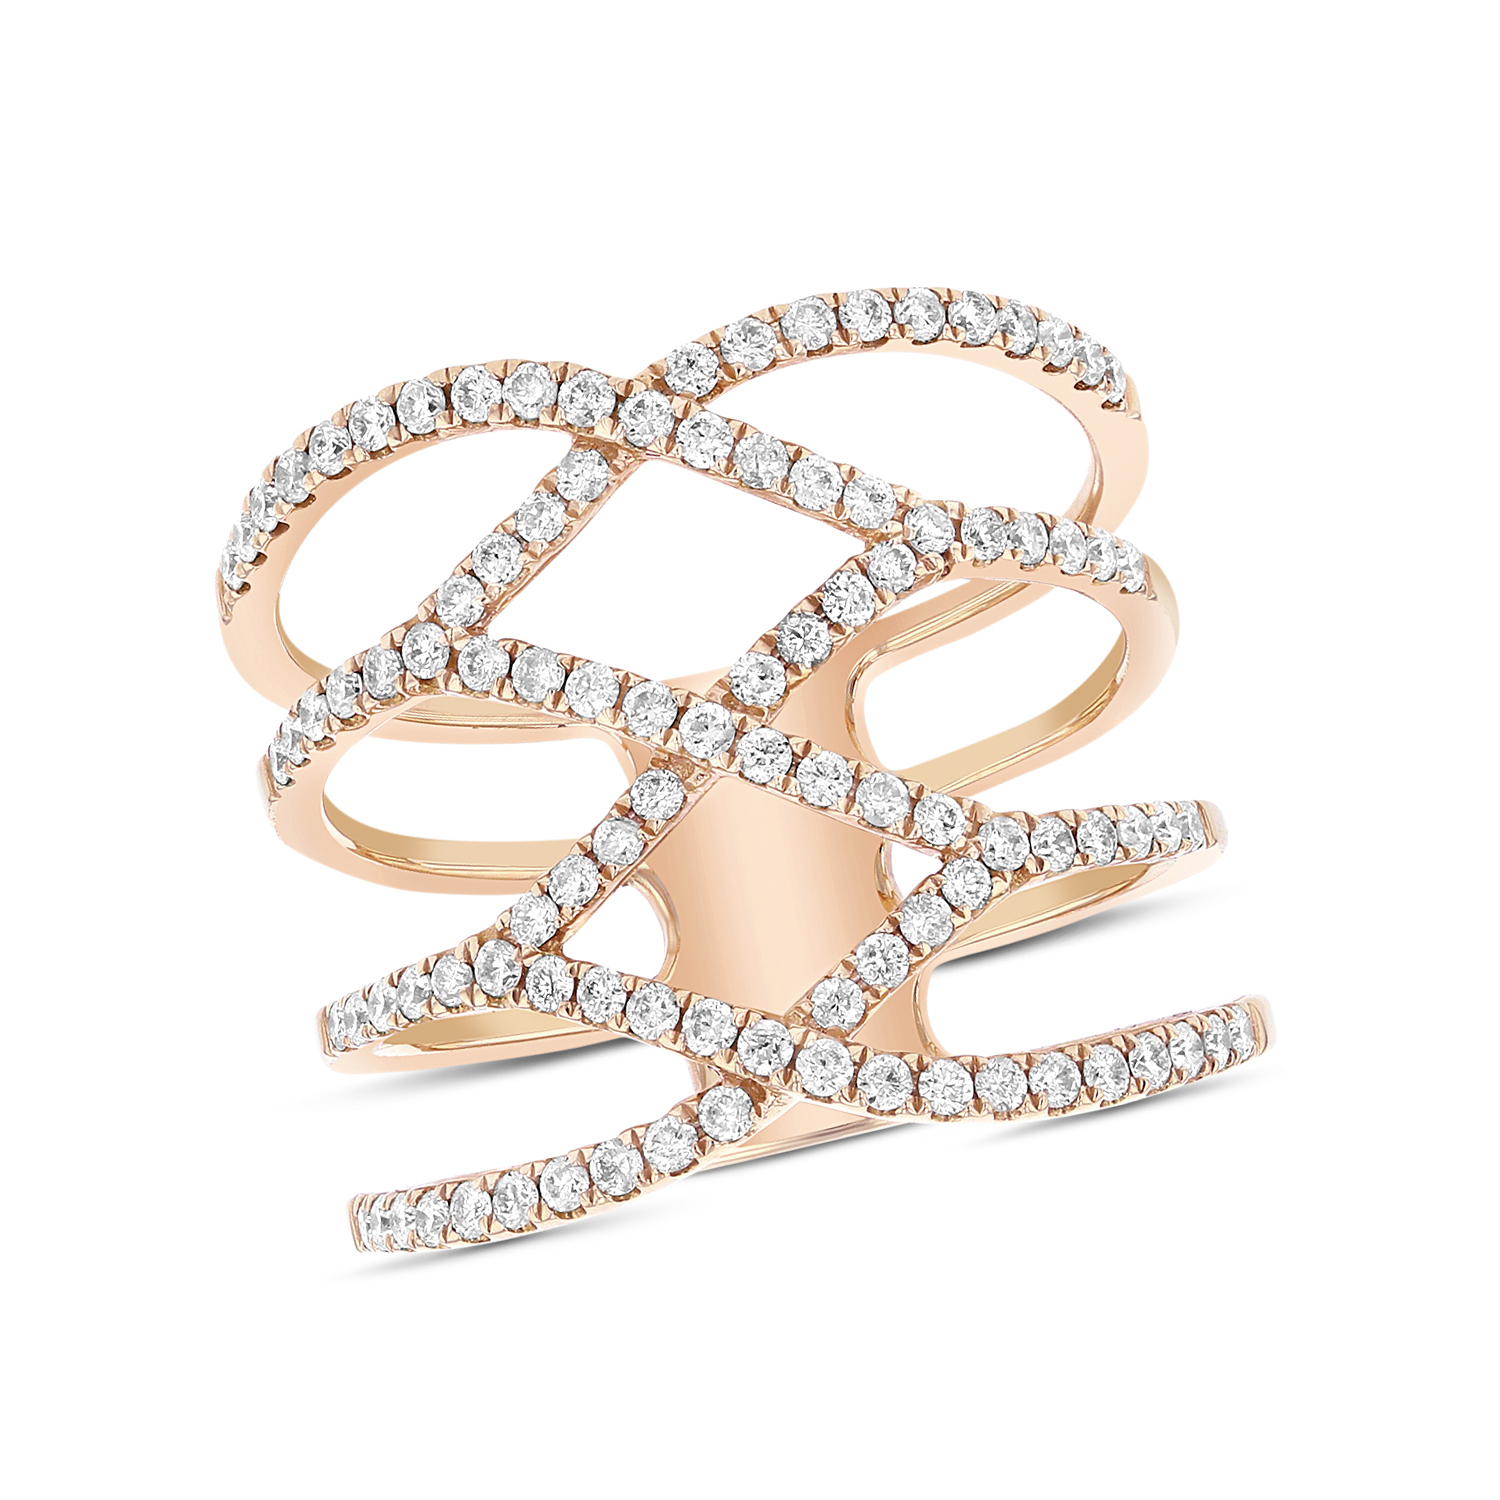 View 0.69ctw Diamond Fashion Ring in 18k Rose Gold